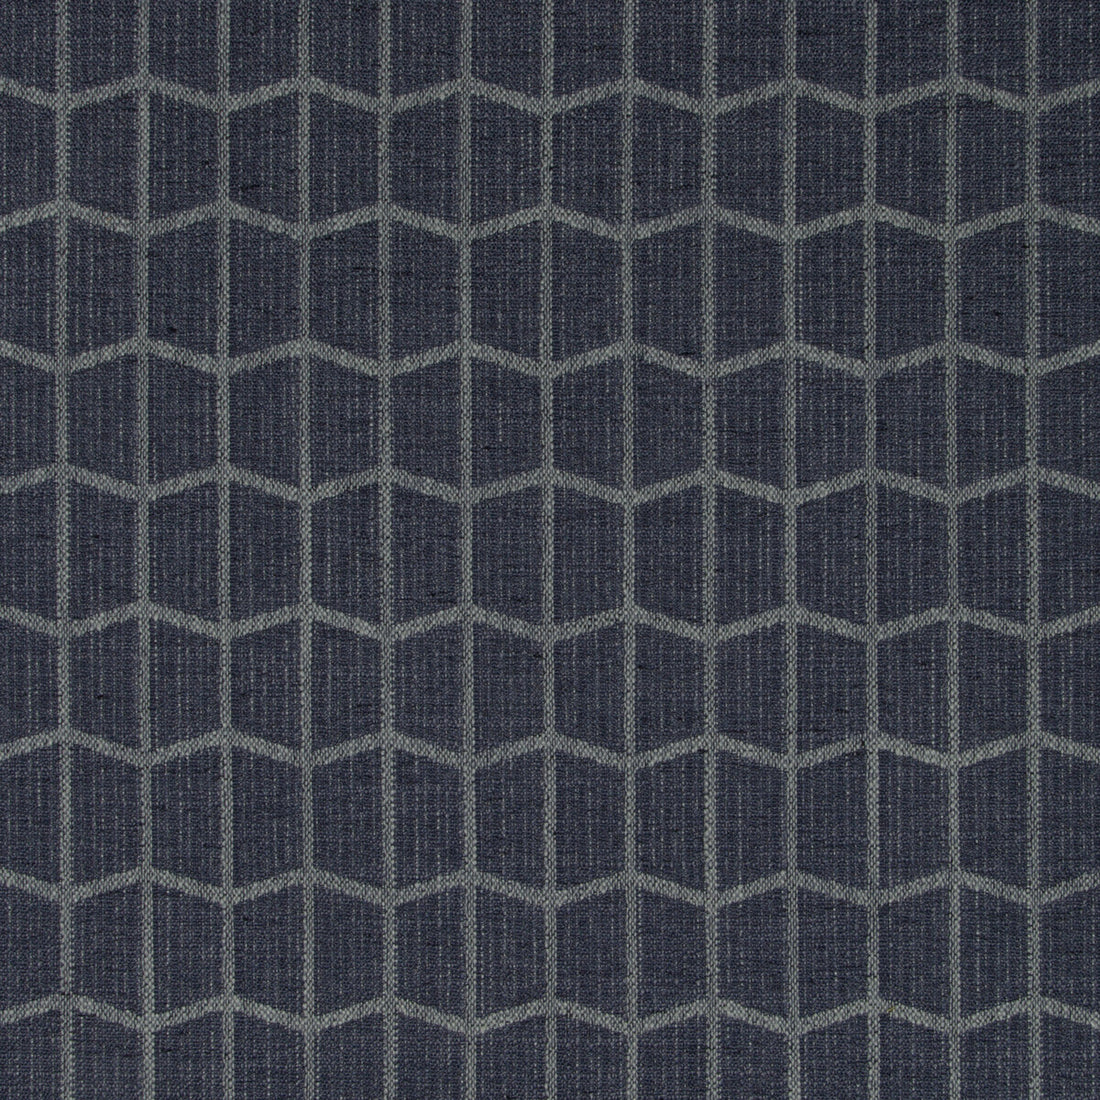 Kravet Smart fabric in 35332-521 color - pattern 35332.521.0 - by Kravet Smart in the Performance Kravetarmor collection